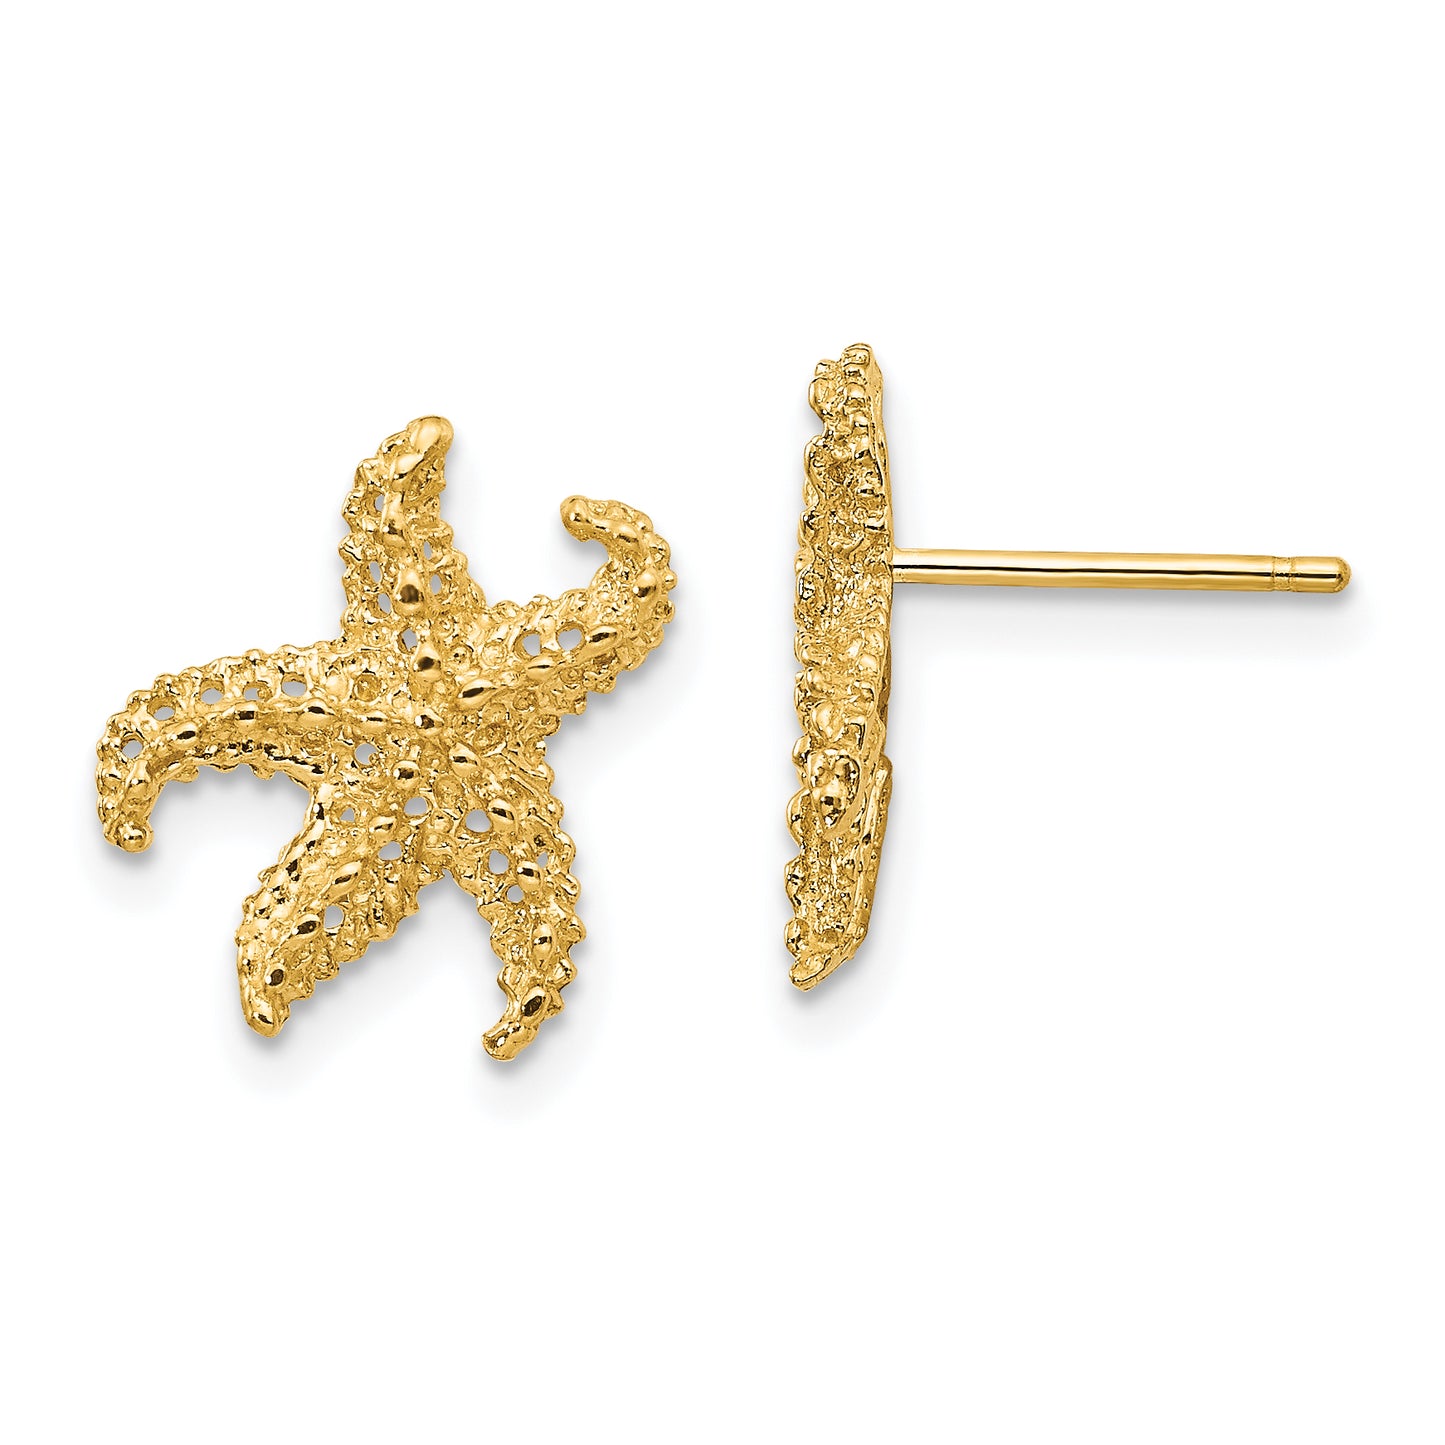 14k Starfish Earrings